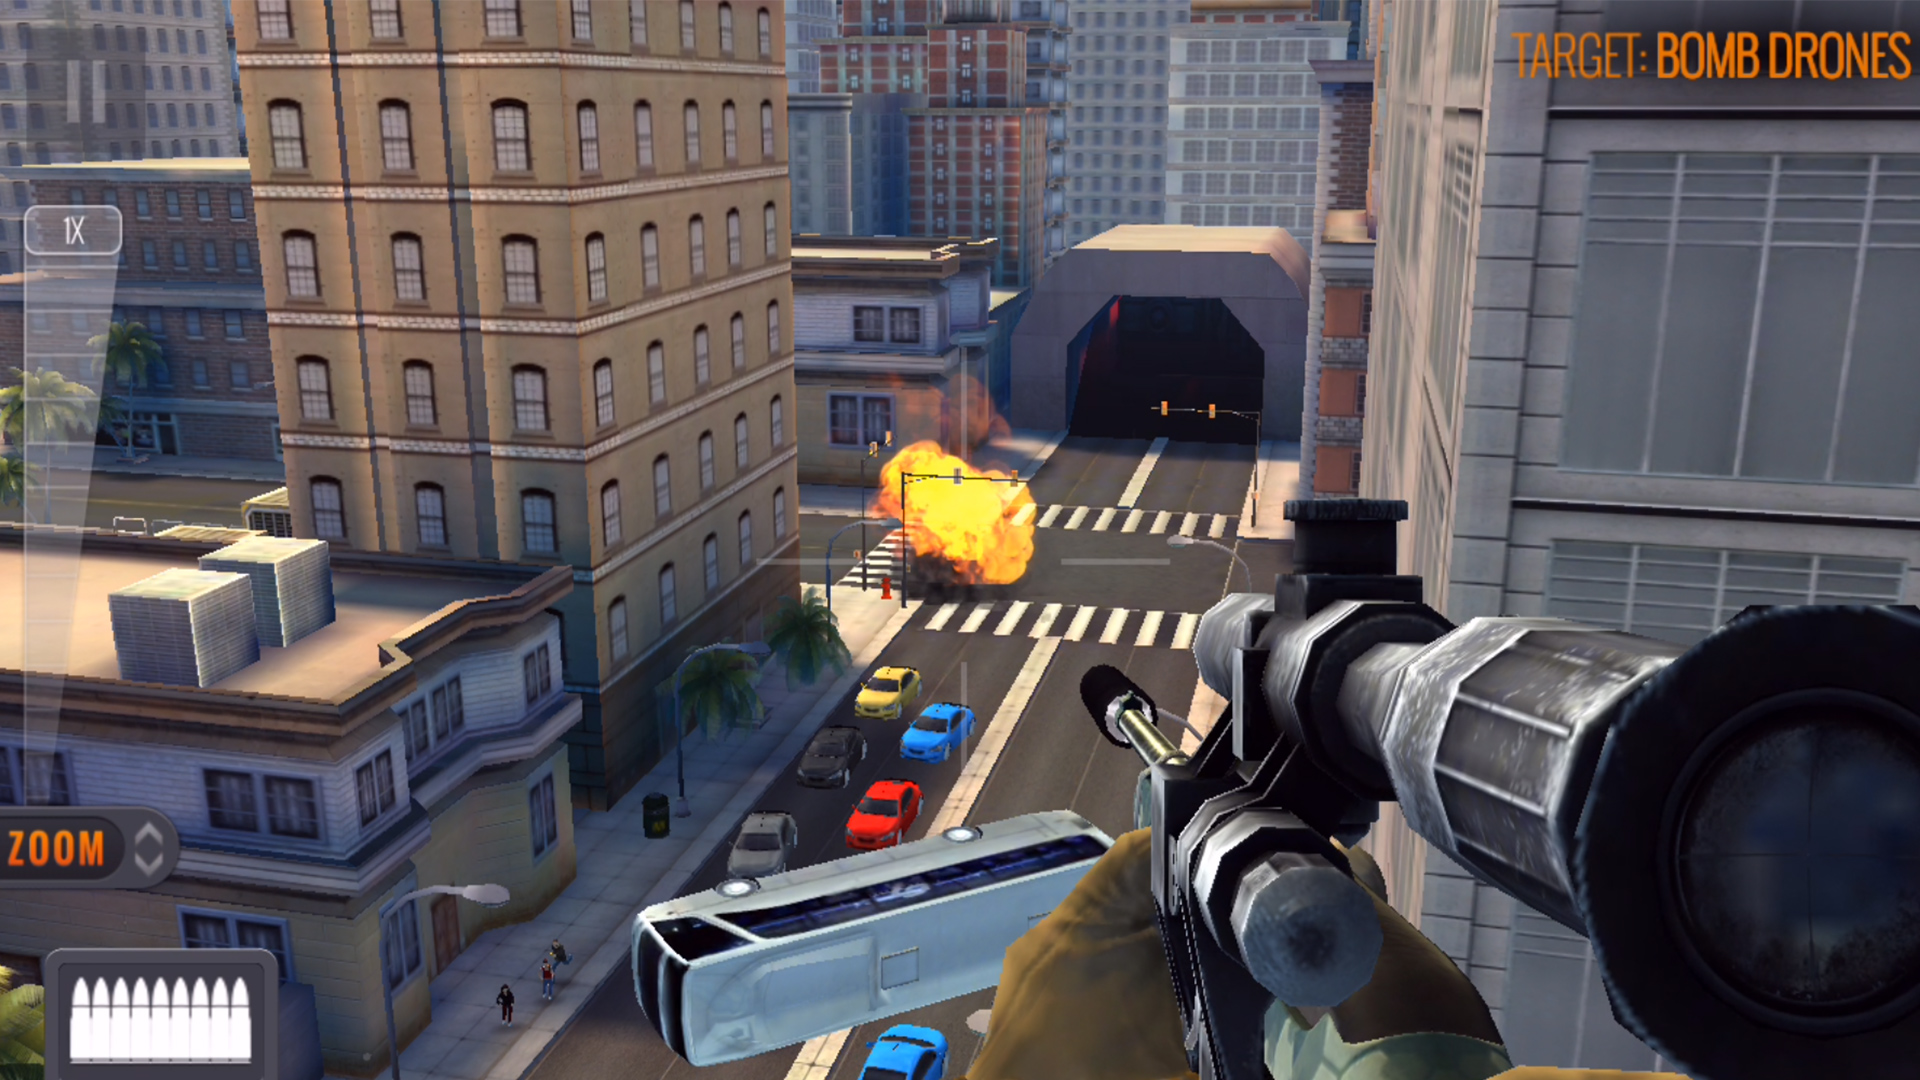 sniper 3d game free download